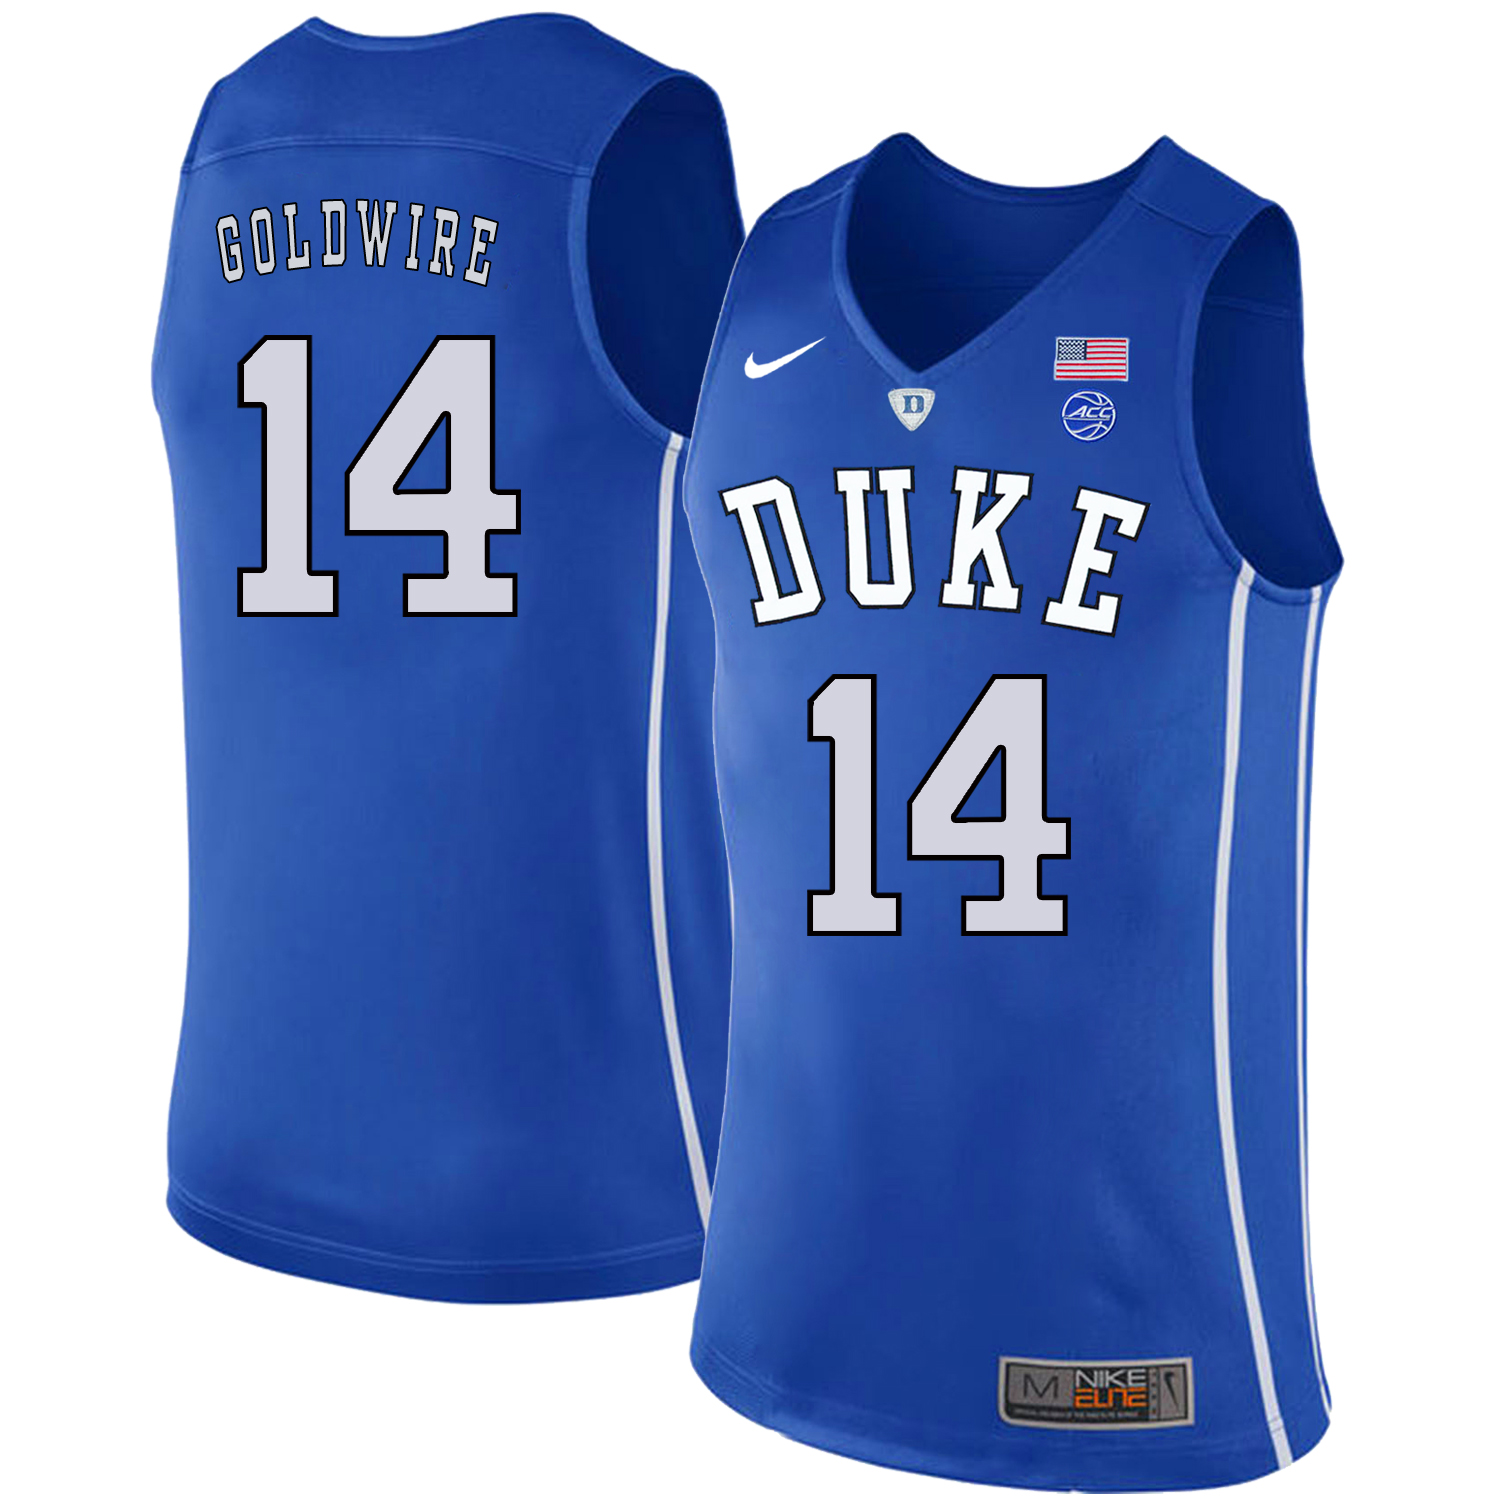 Duke Blue Devils 14 Jordan Goldwire Blue Nike College Basketball Jersey